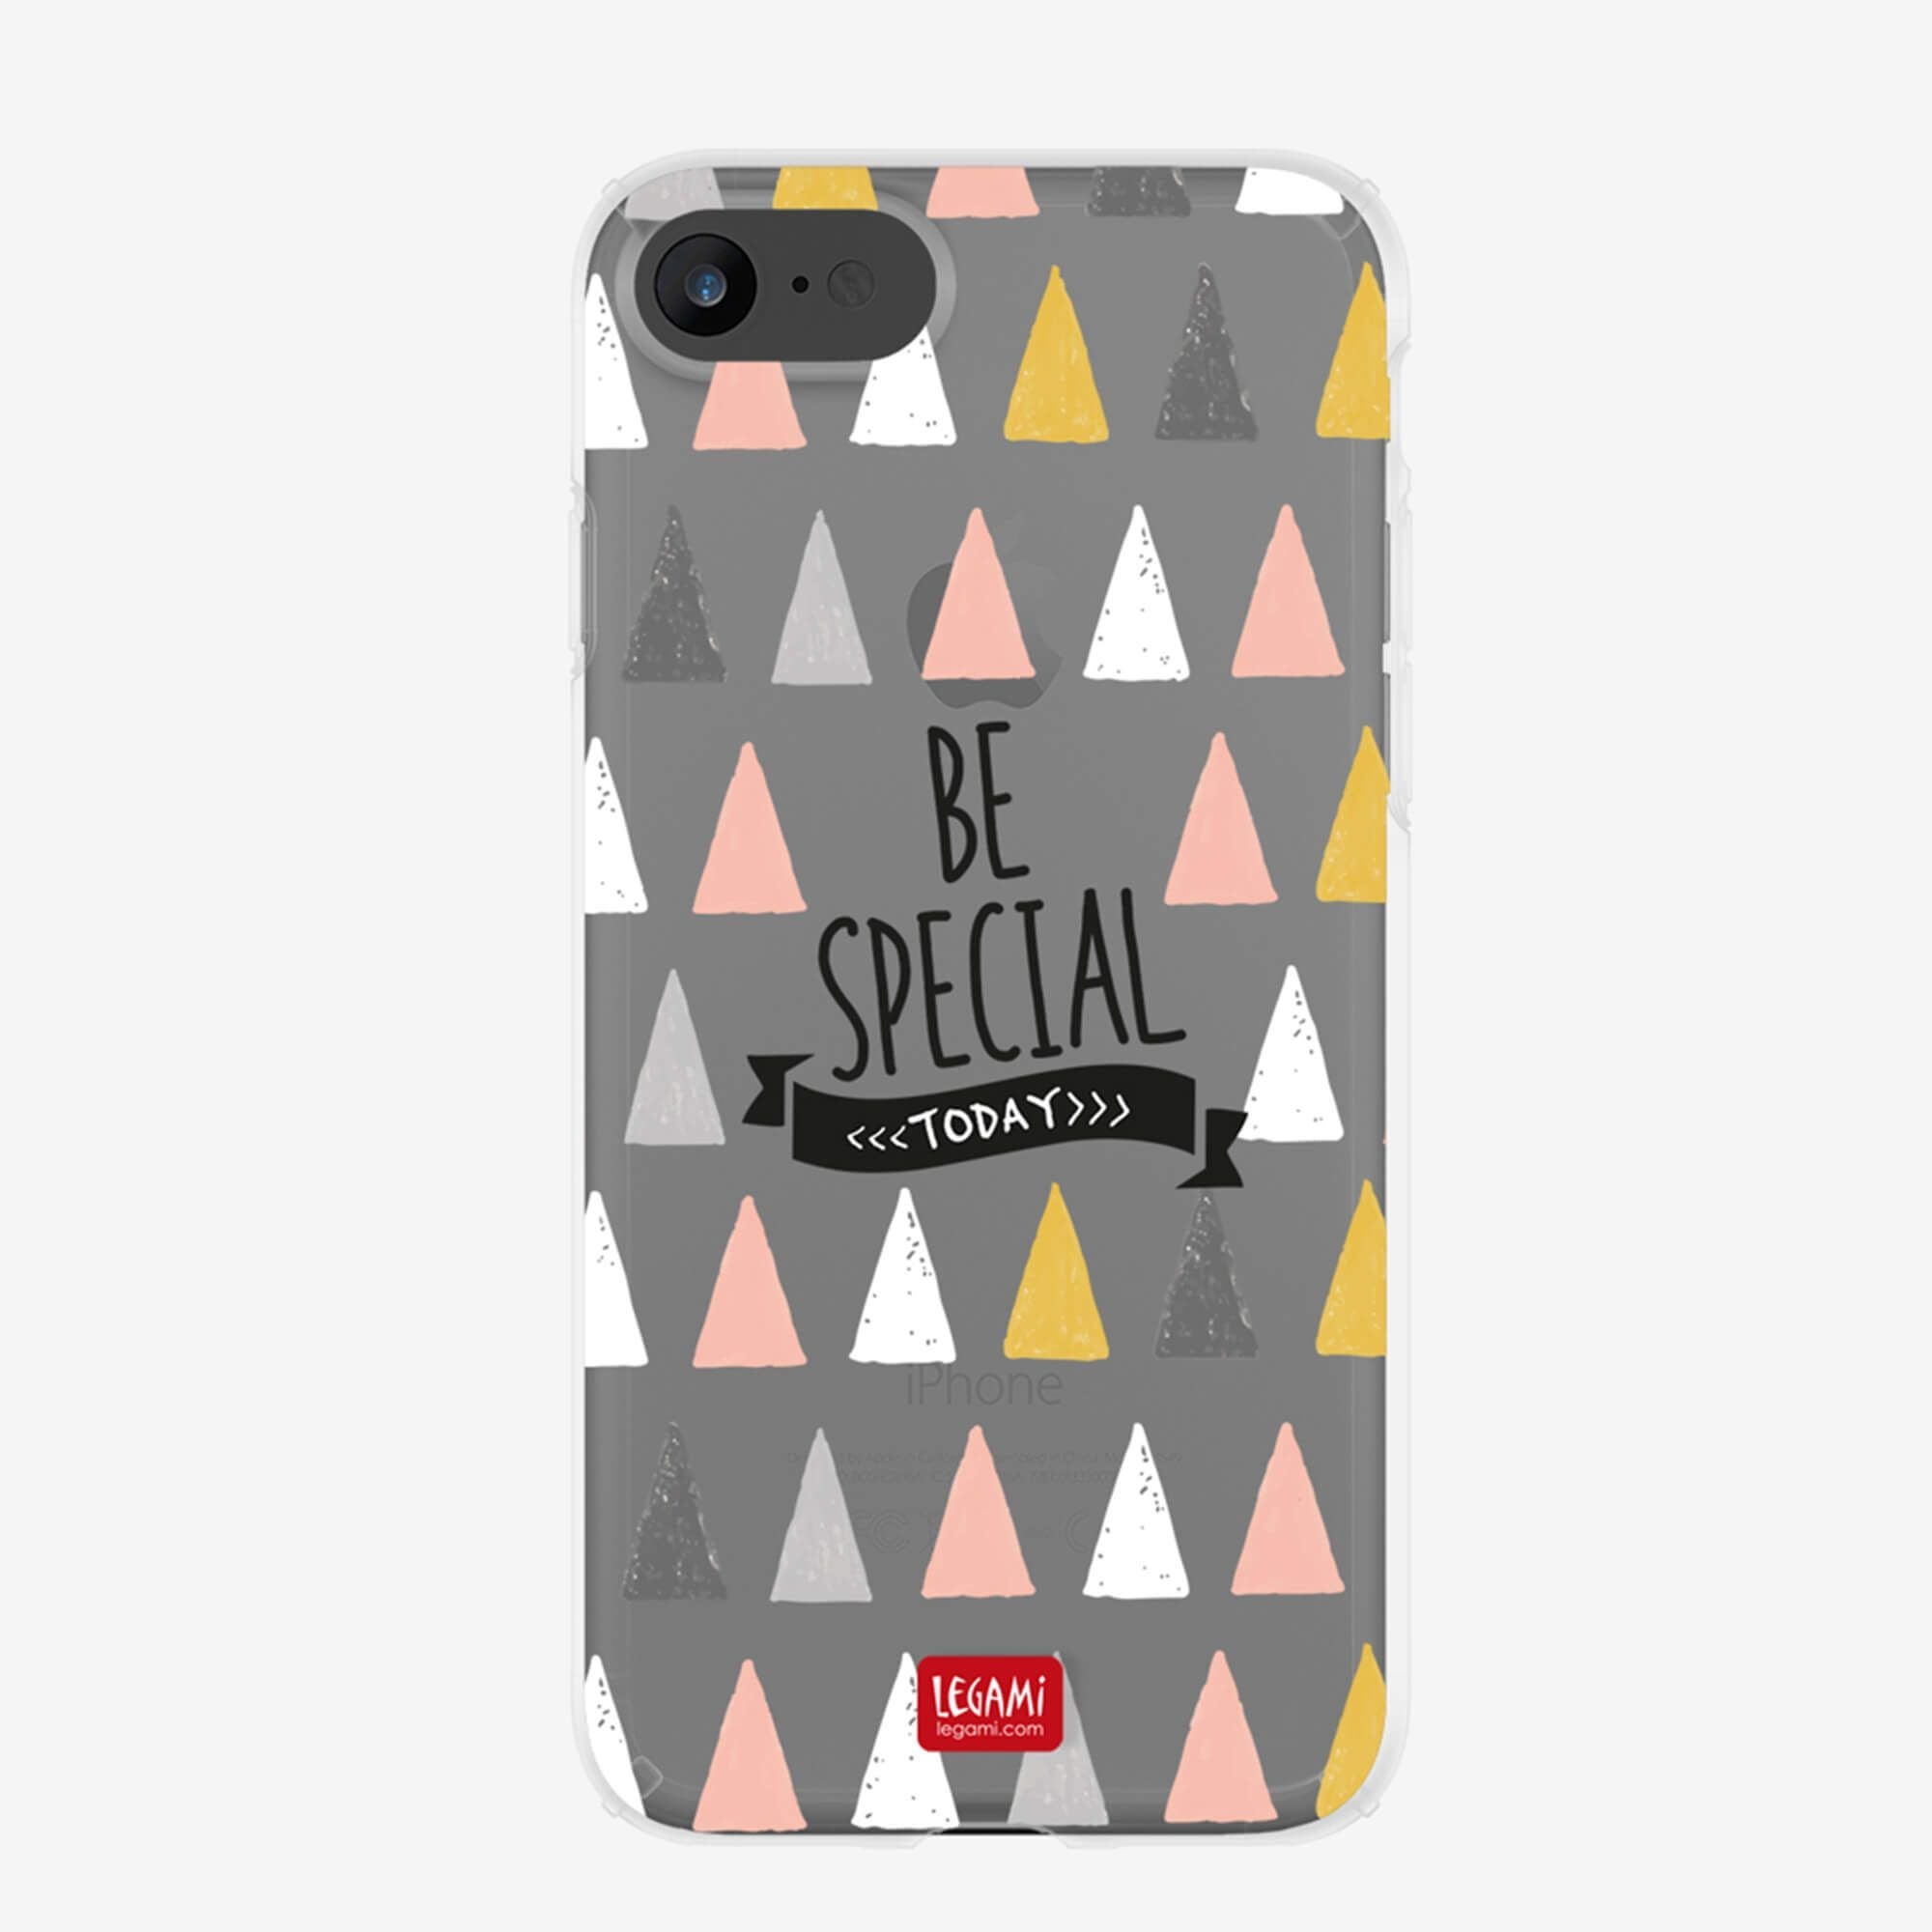 Be special today - Coque iPhone 7 transparente Legami 